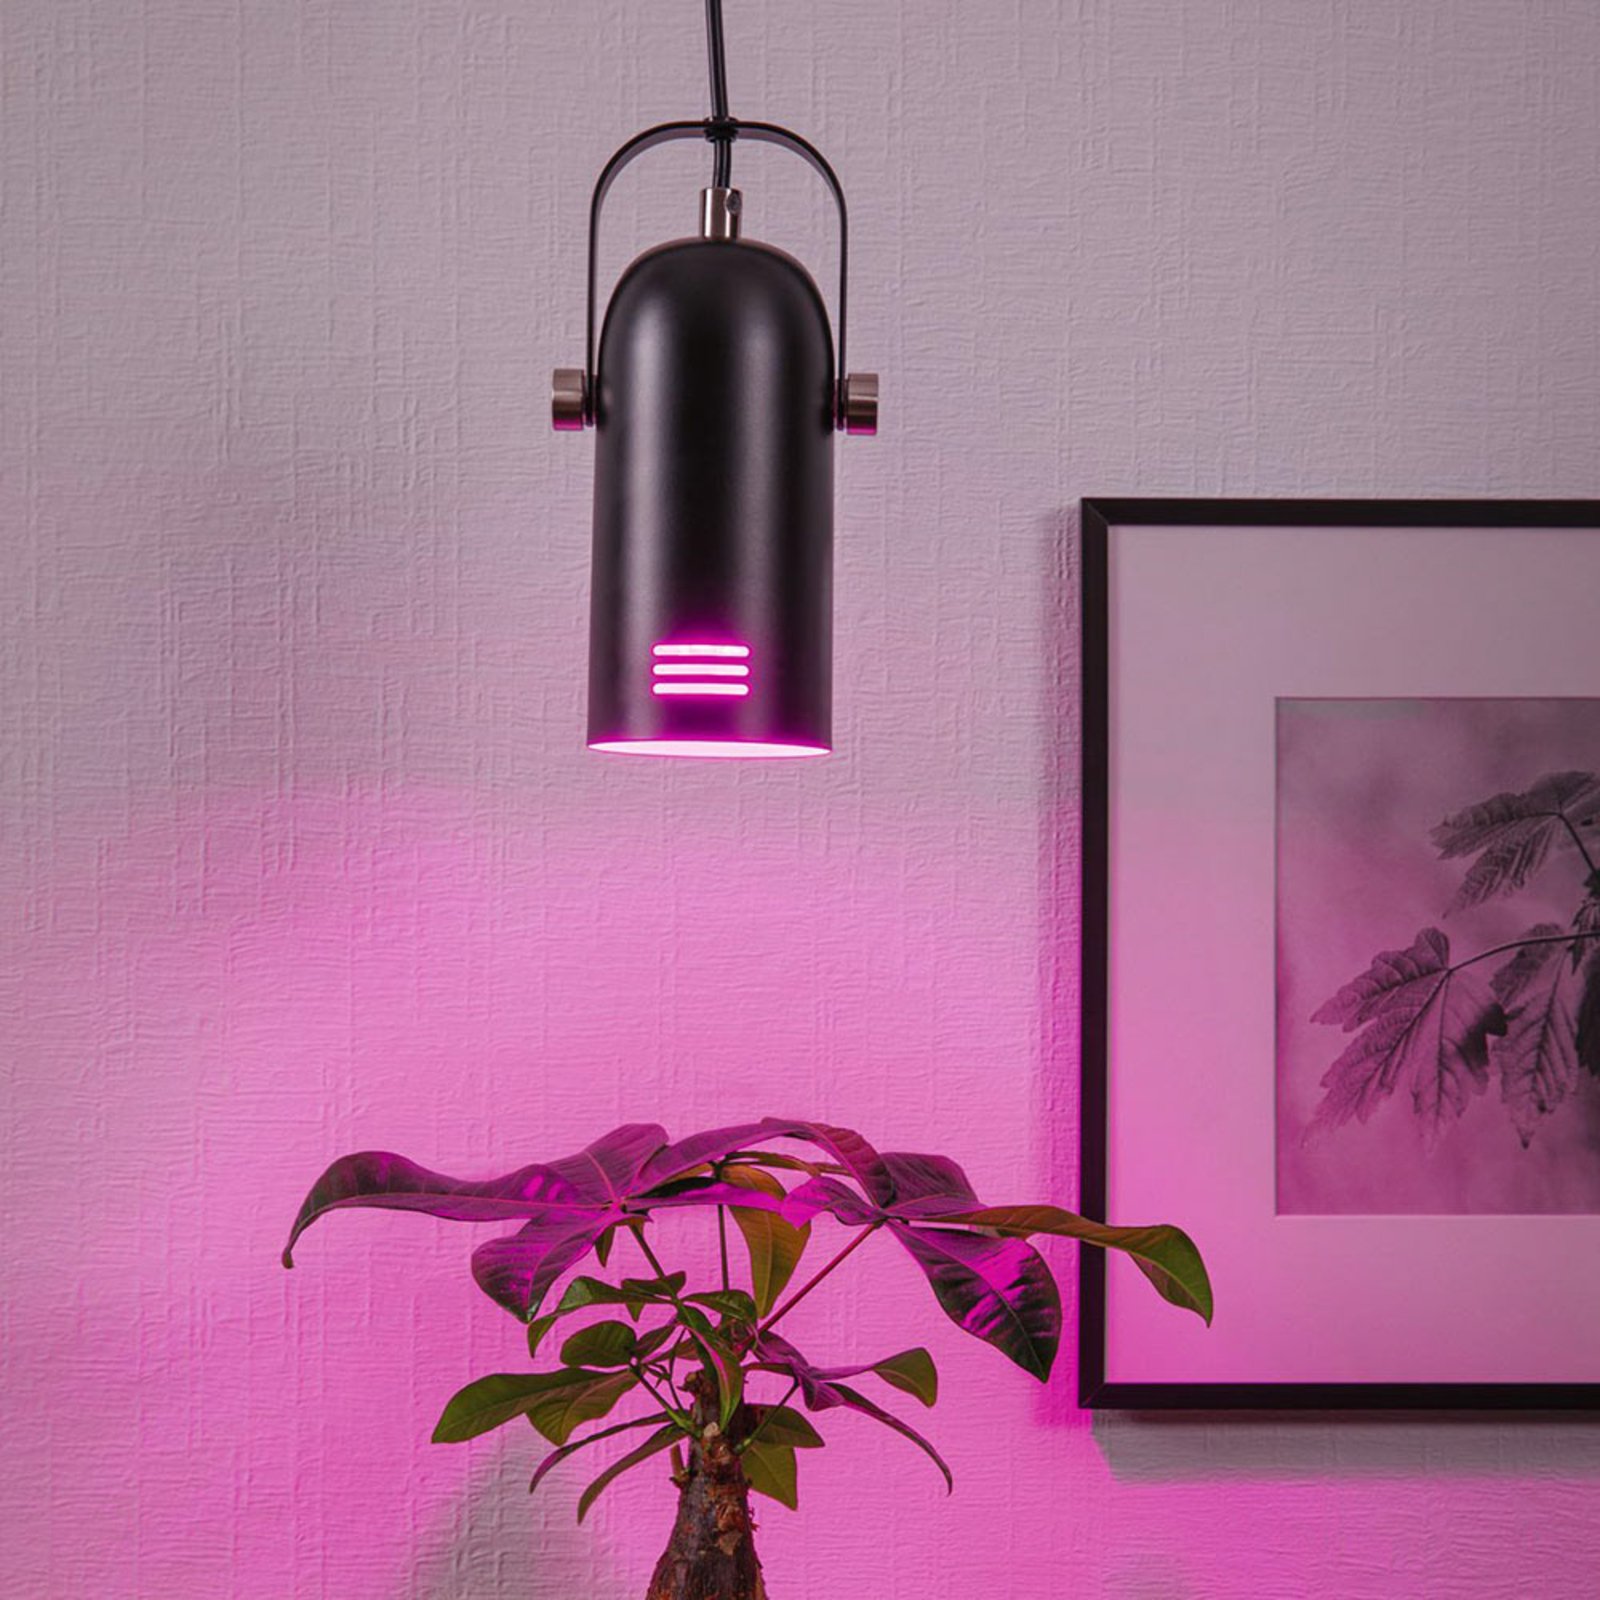 Paulmann Neordic Lavea planten-hanglamp, zwart